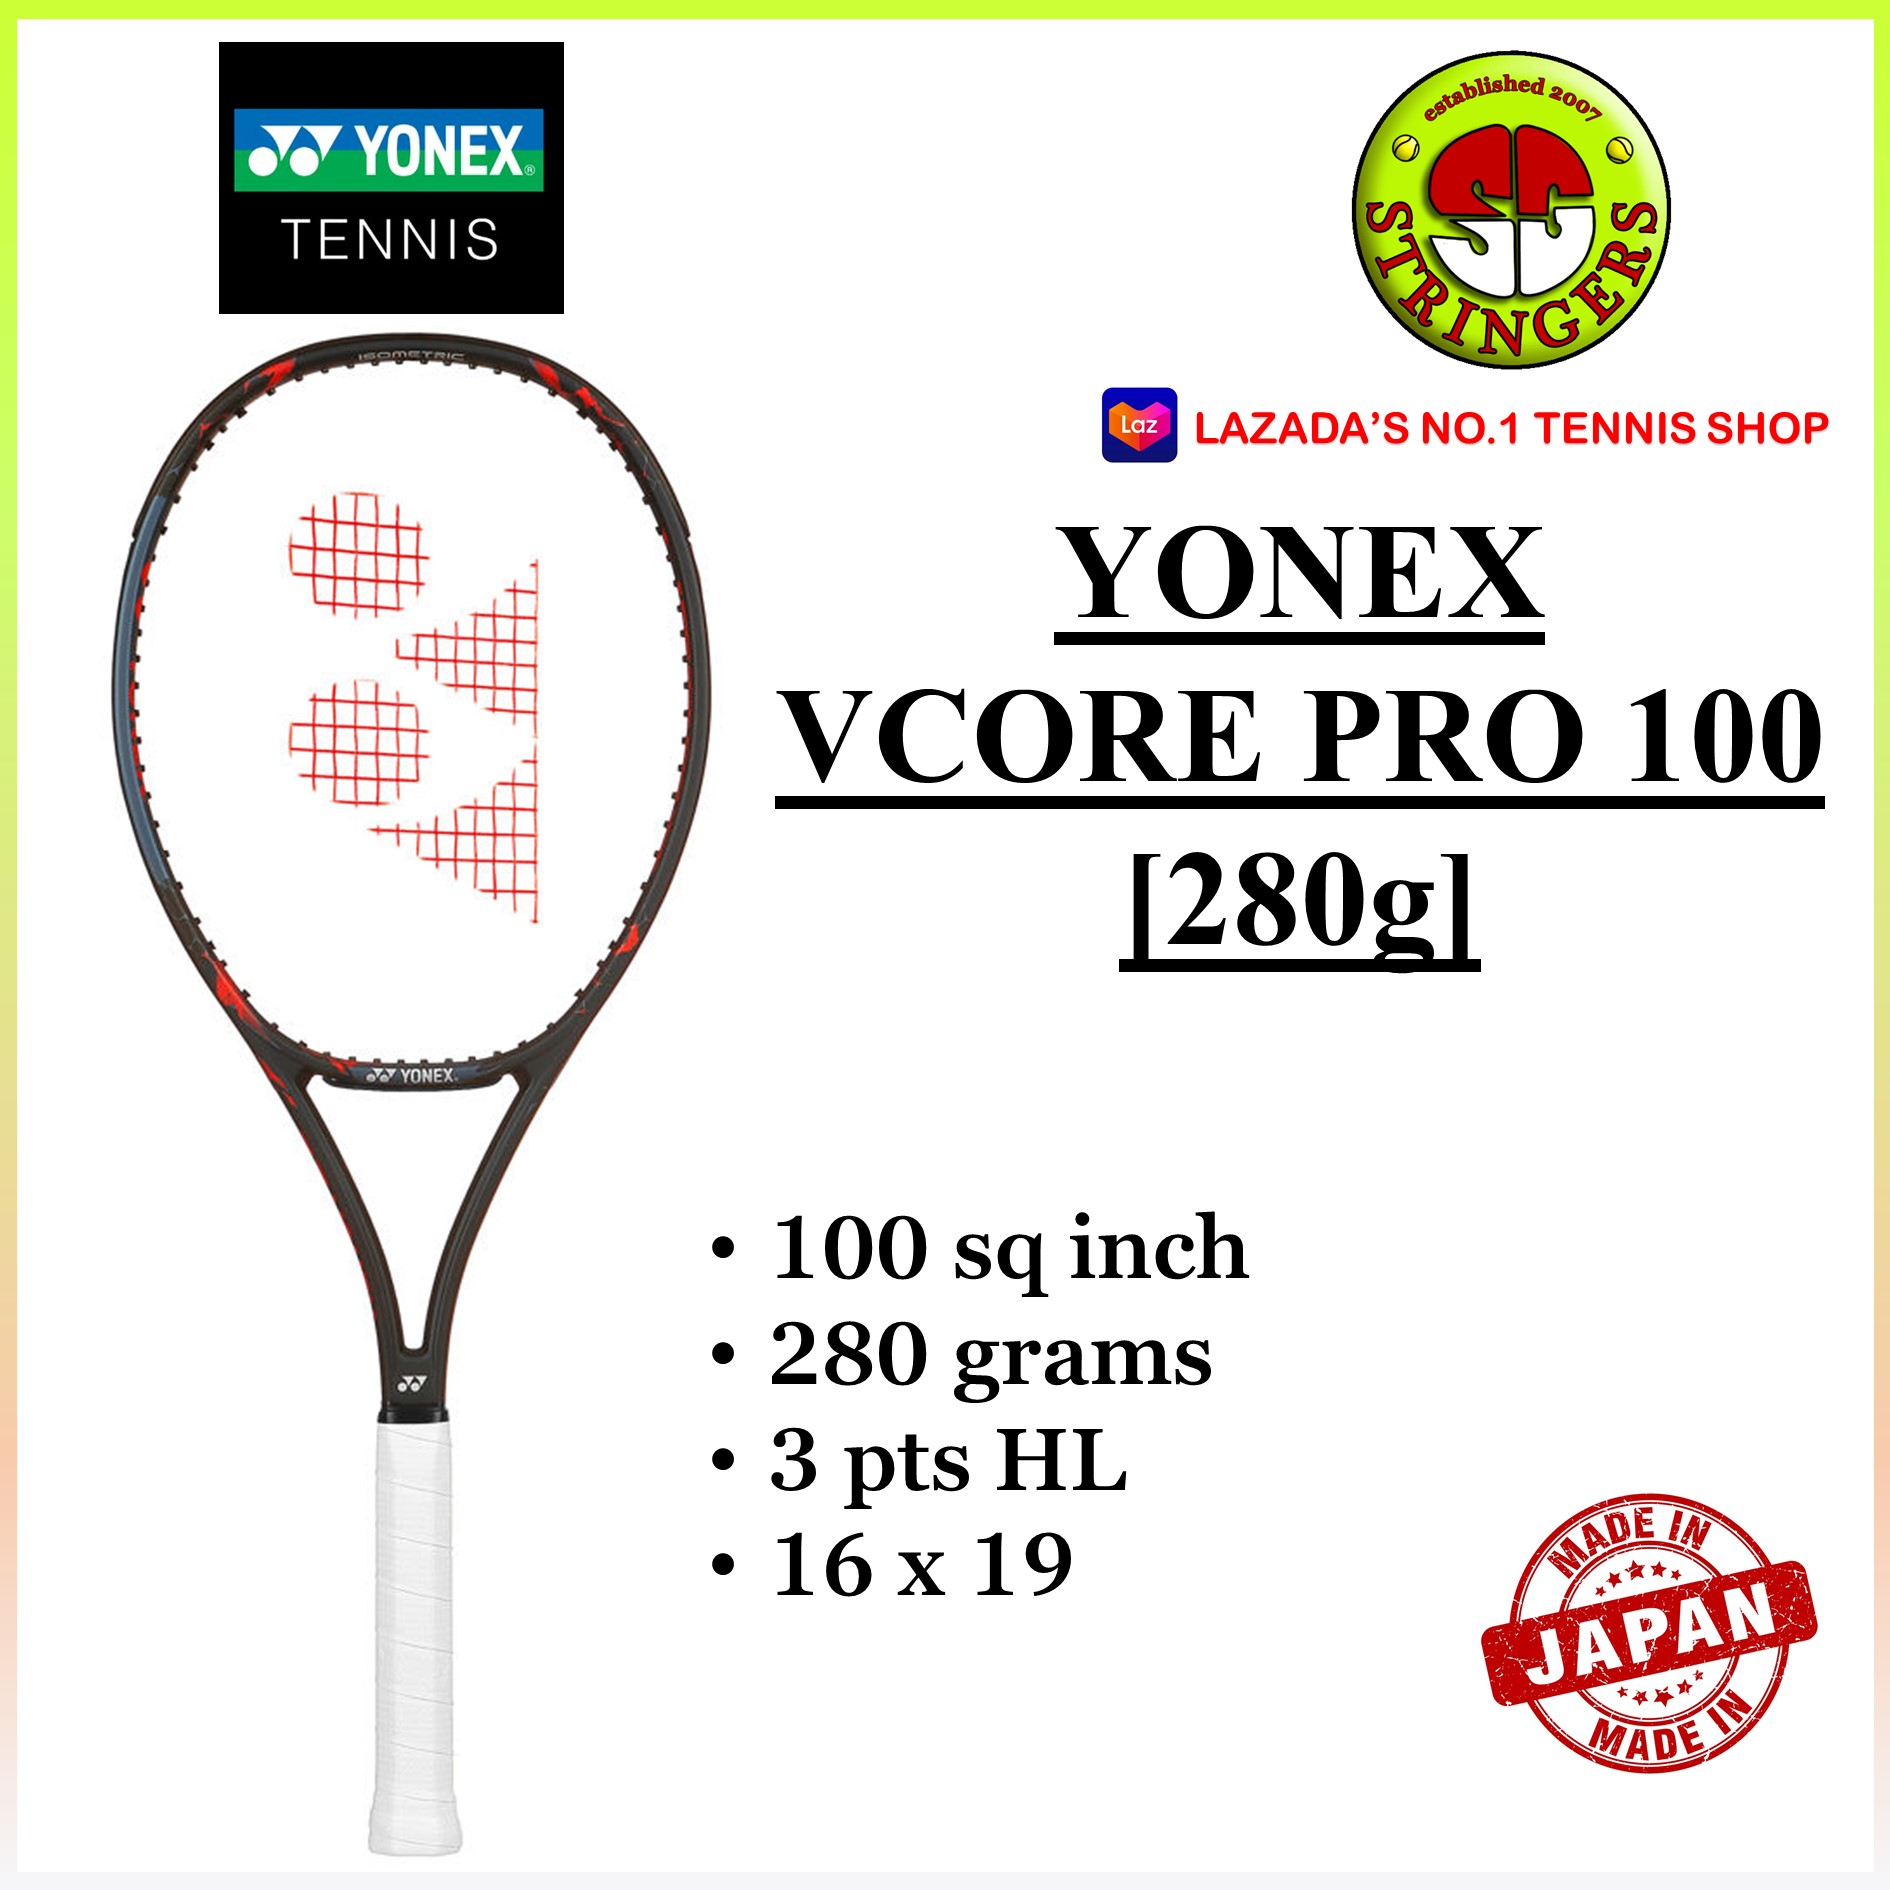 Yonex Vcore Pro 100 LG [280g] Tennis racket | Lazada Singapore